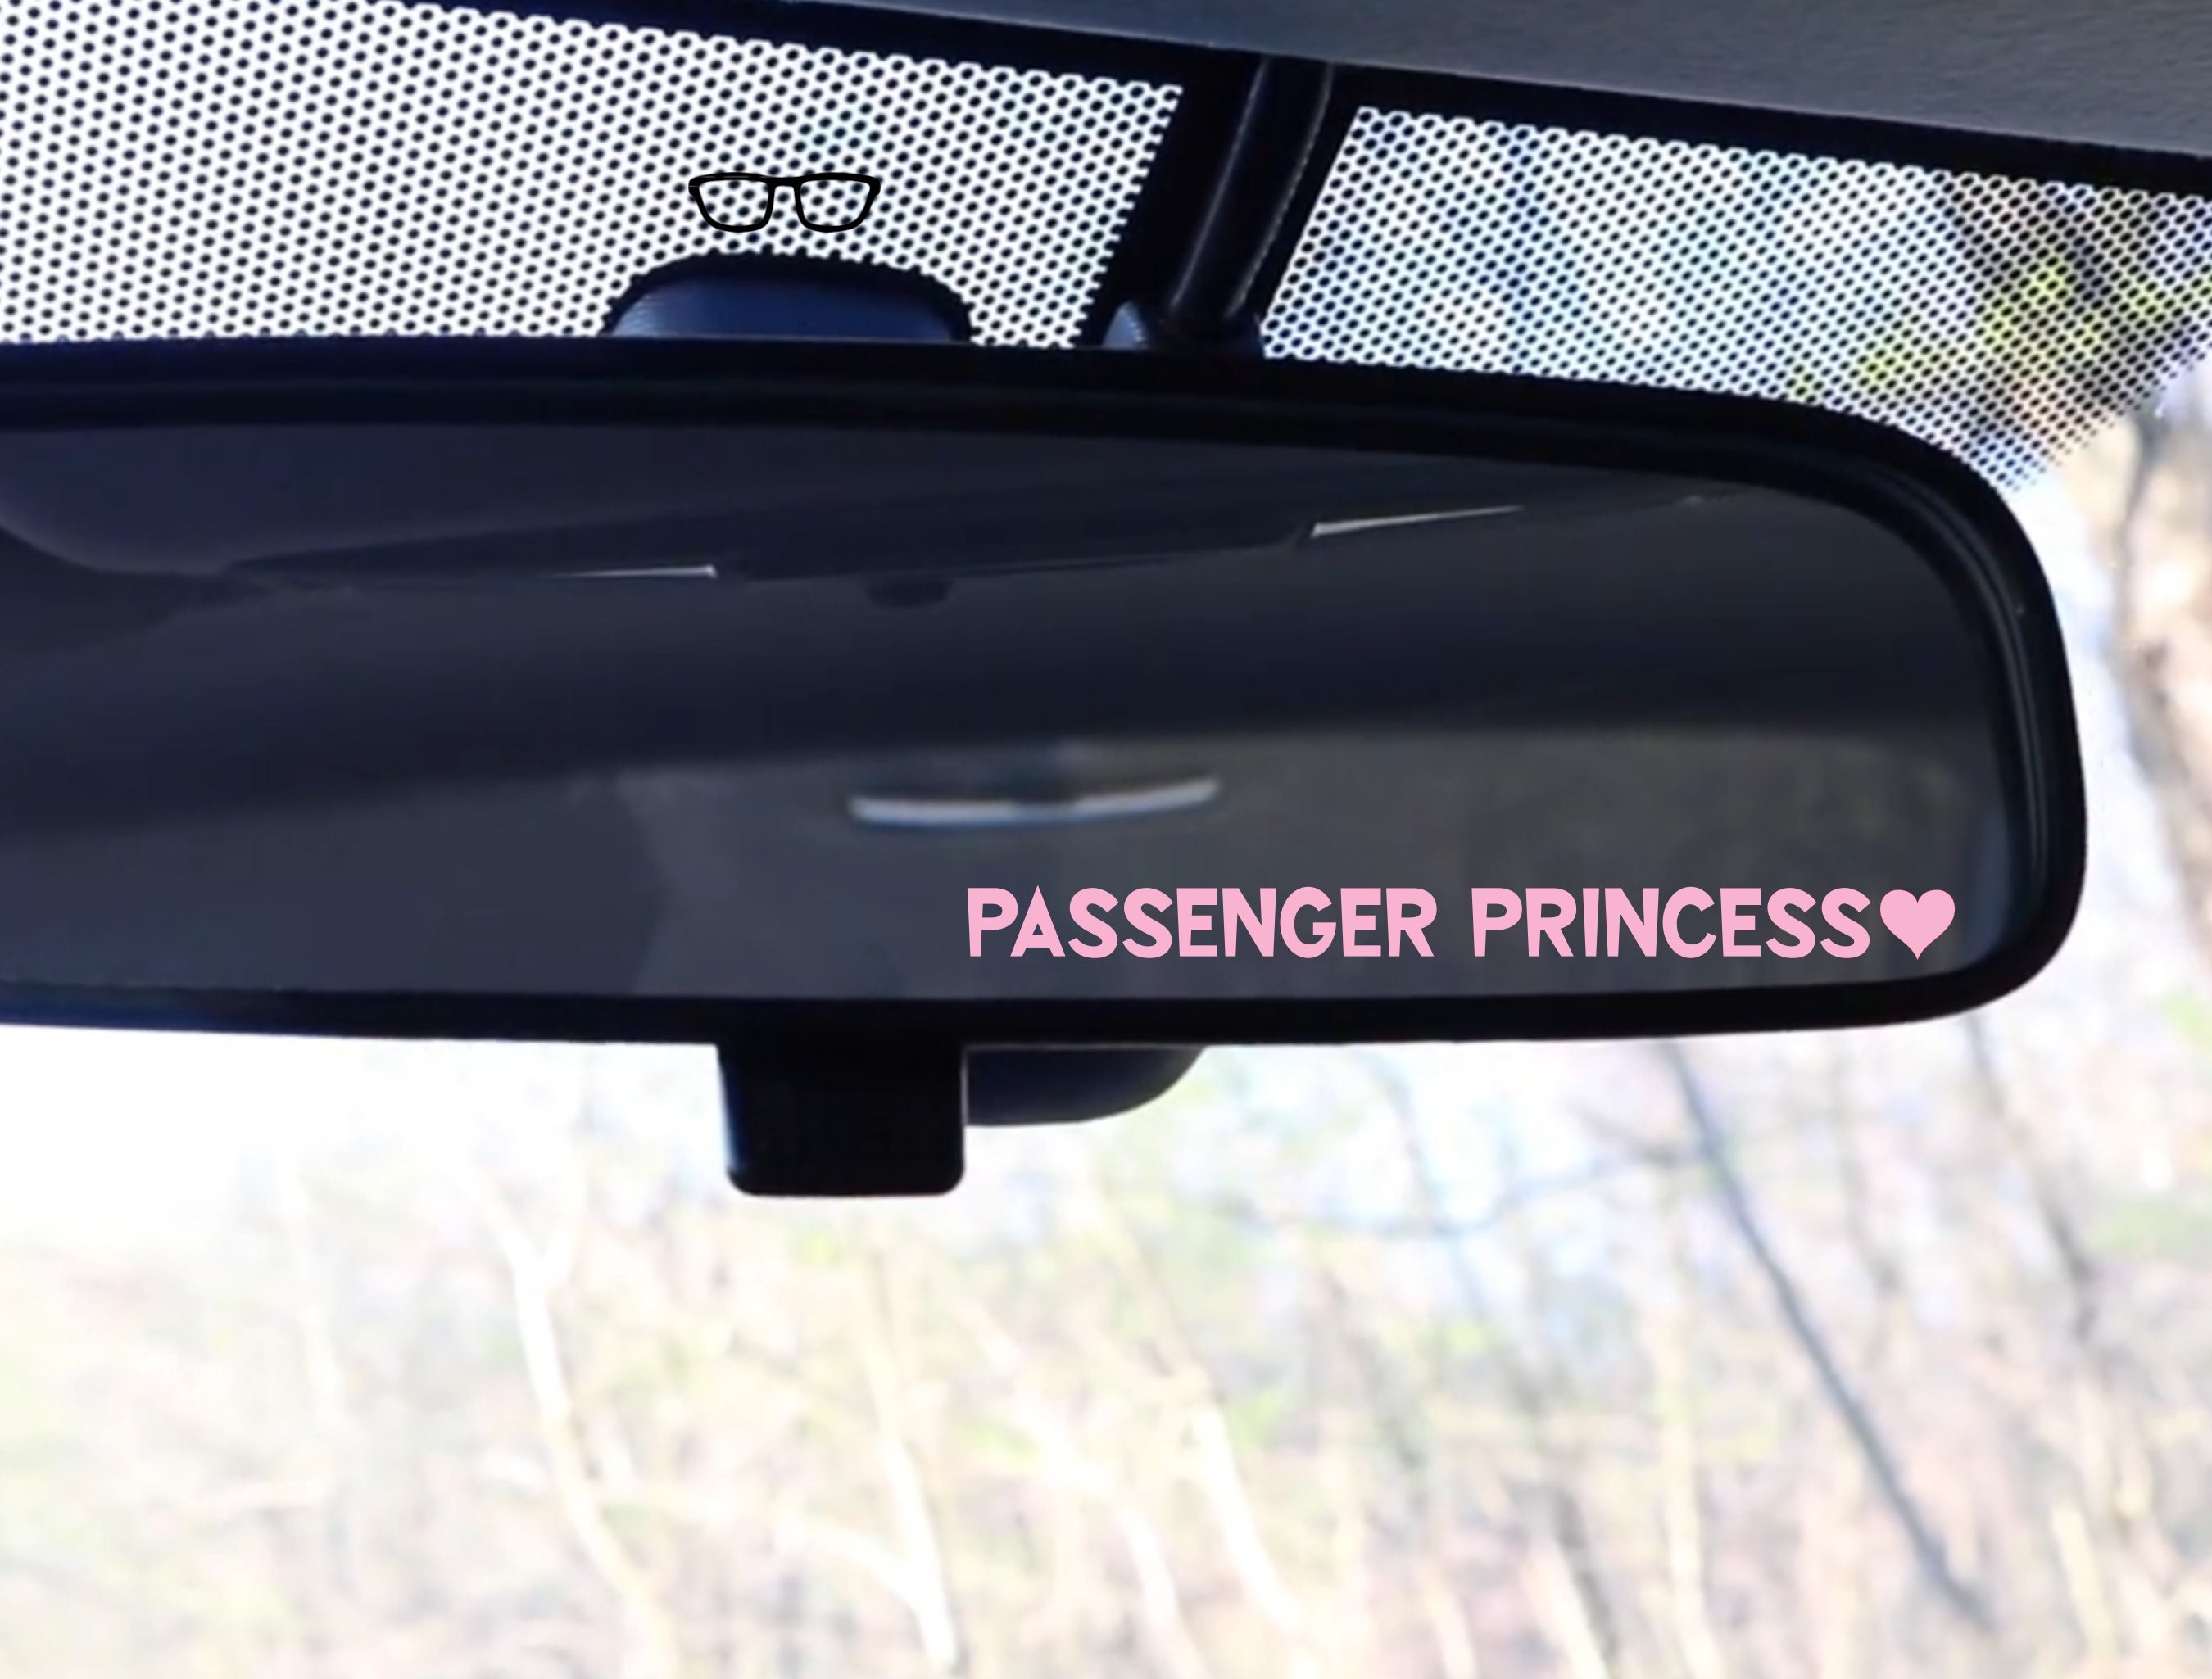 Passenger Princess, Car Mirror Decal, Car Visor Sticker, Affirmation Decal,  Positivity Decal, Cute Sticker, Mirror Decal, Free Shipping 